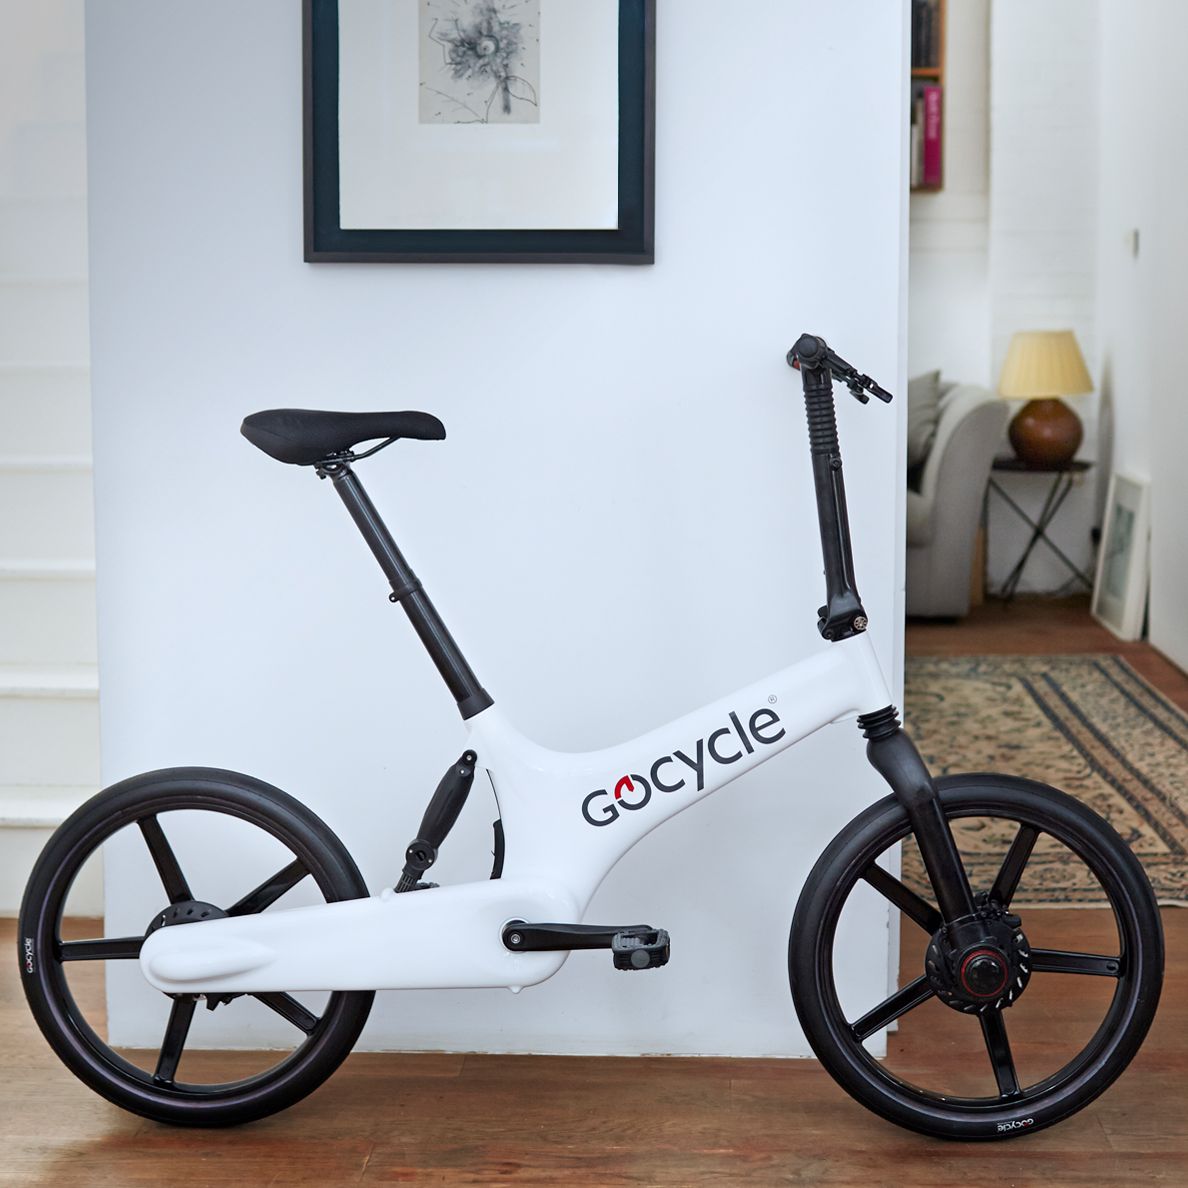 gocycle gxi